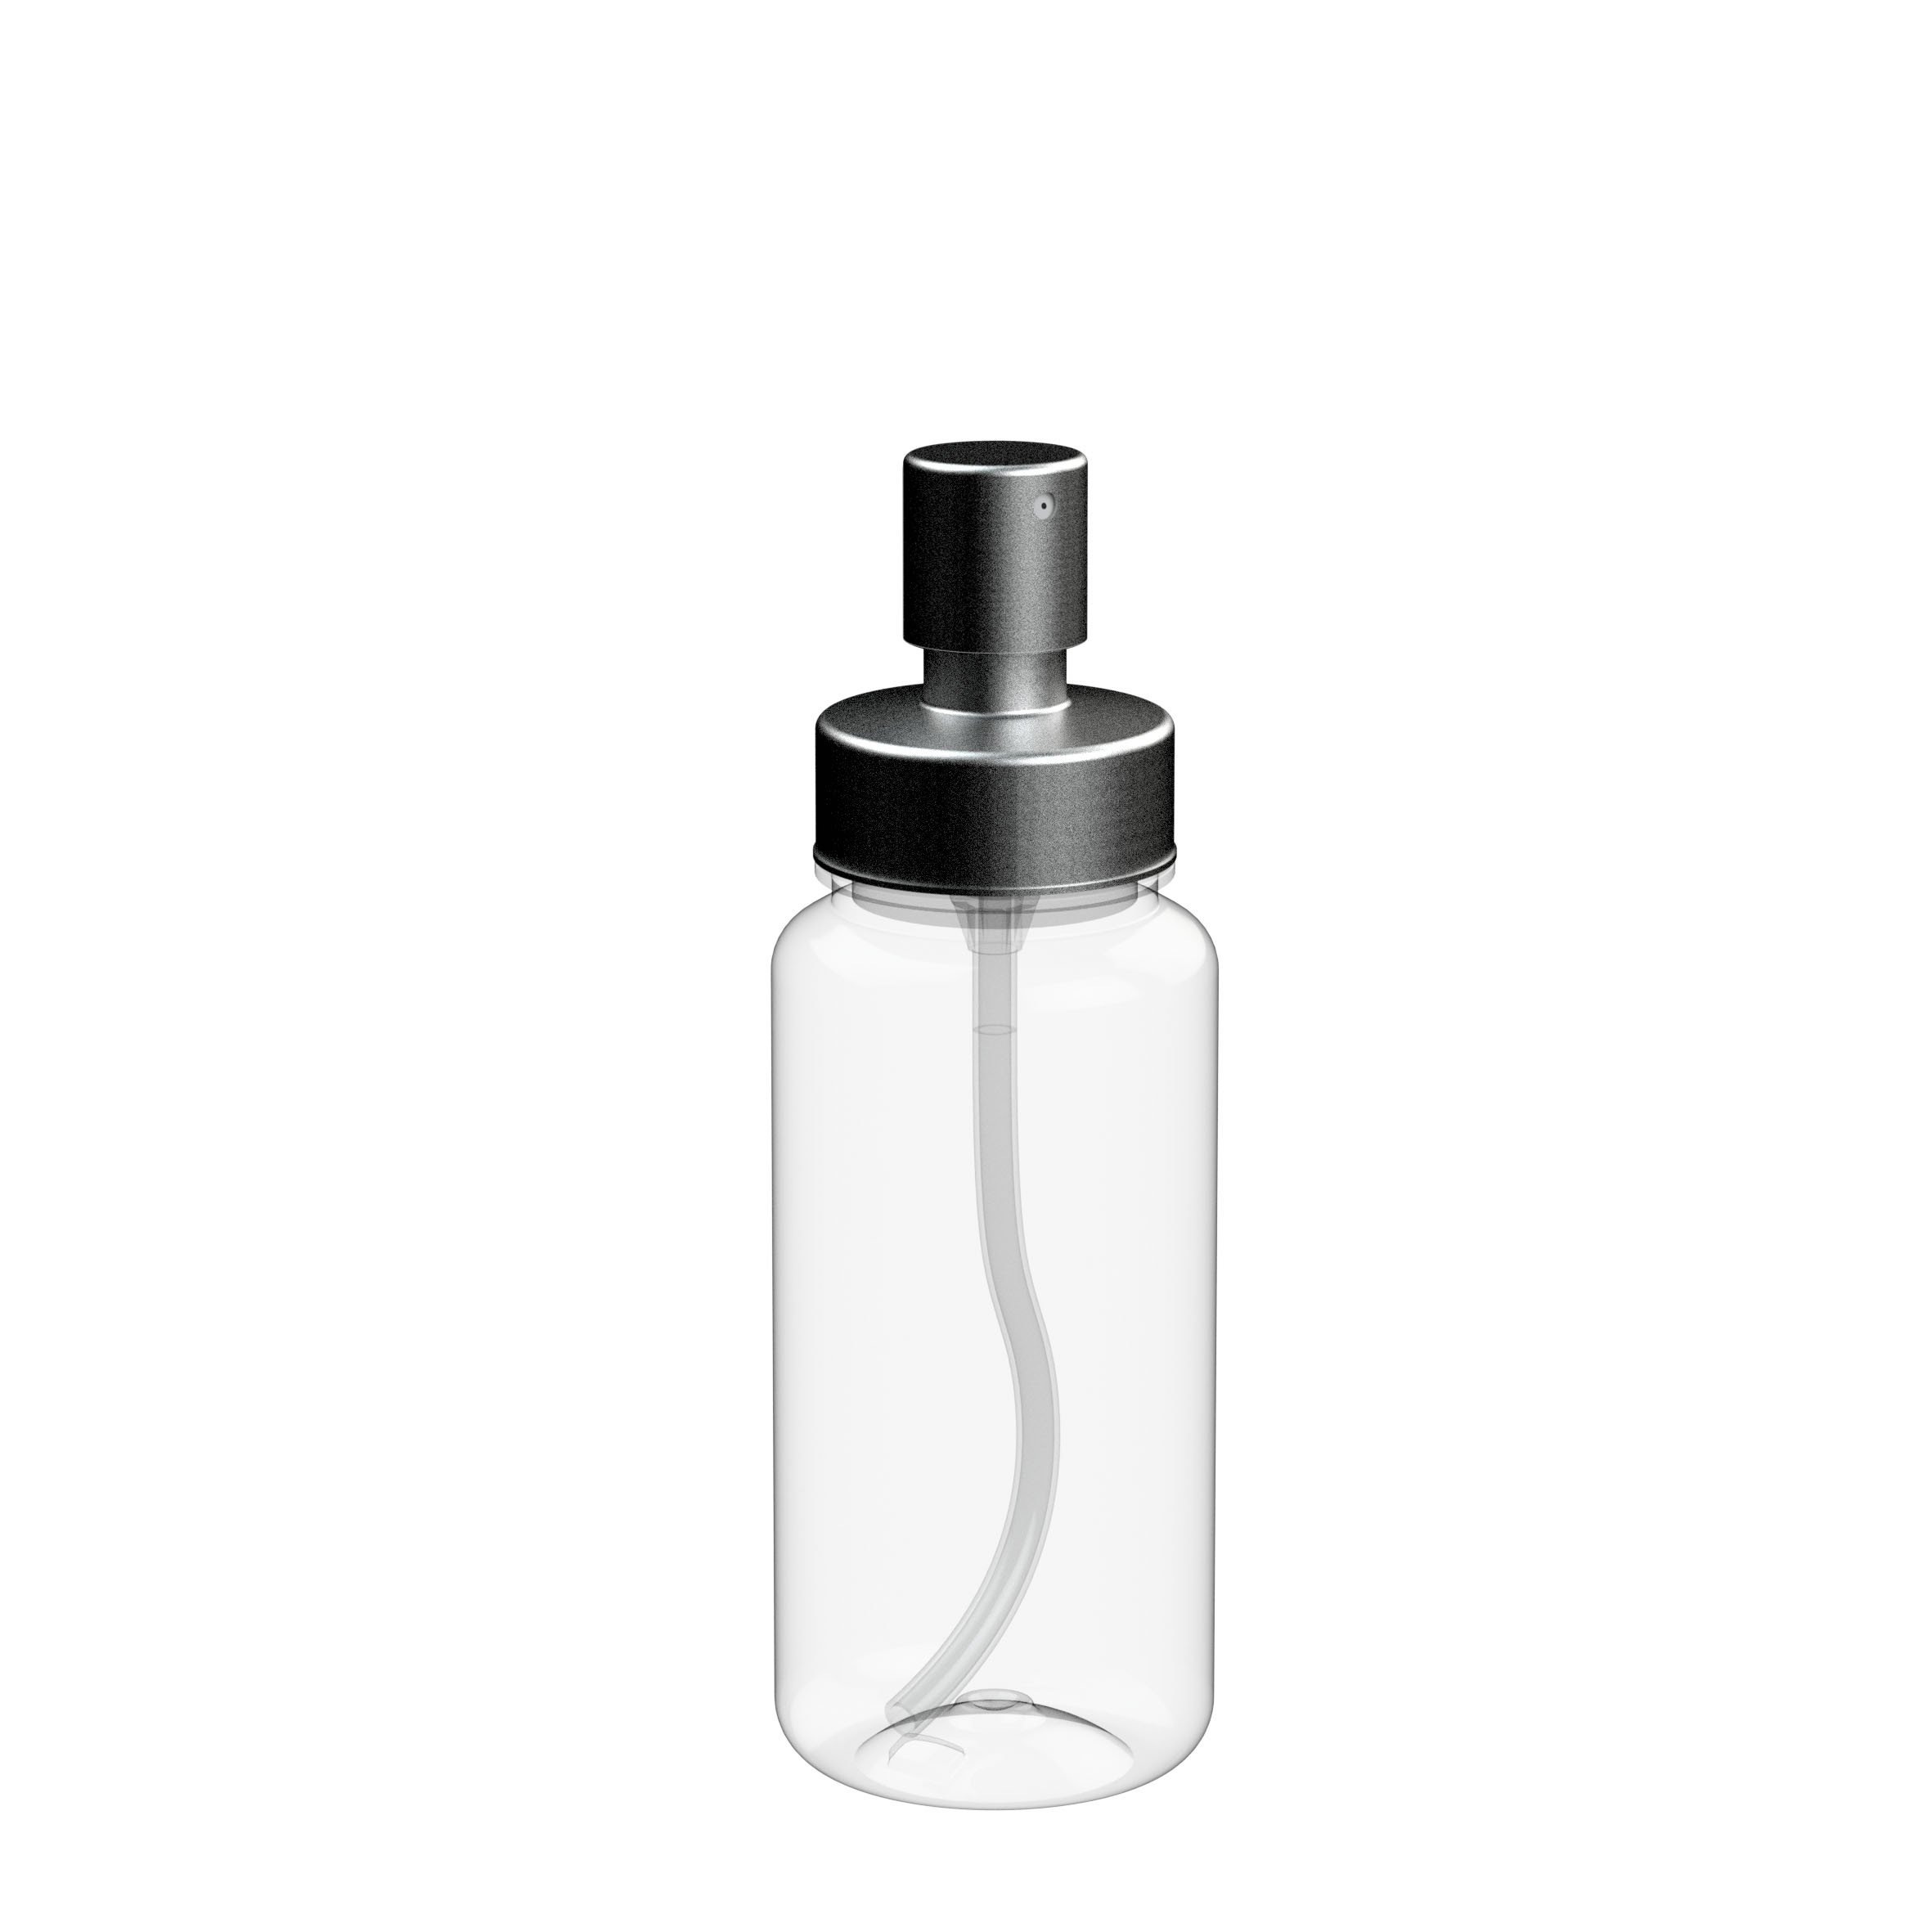 Sprayflasche "Superior" 0,4 l, klar-transparent, transparent/silber